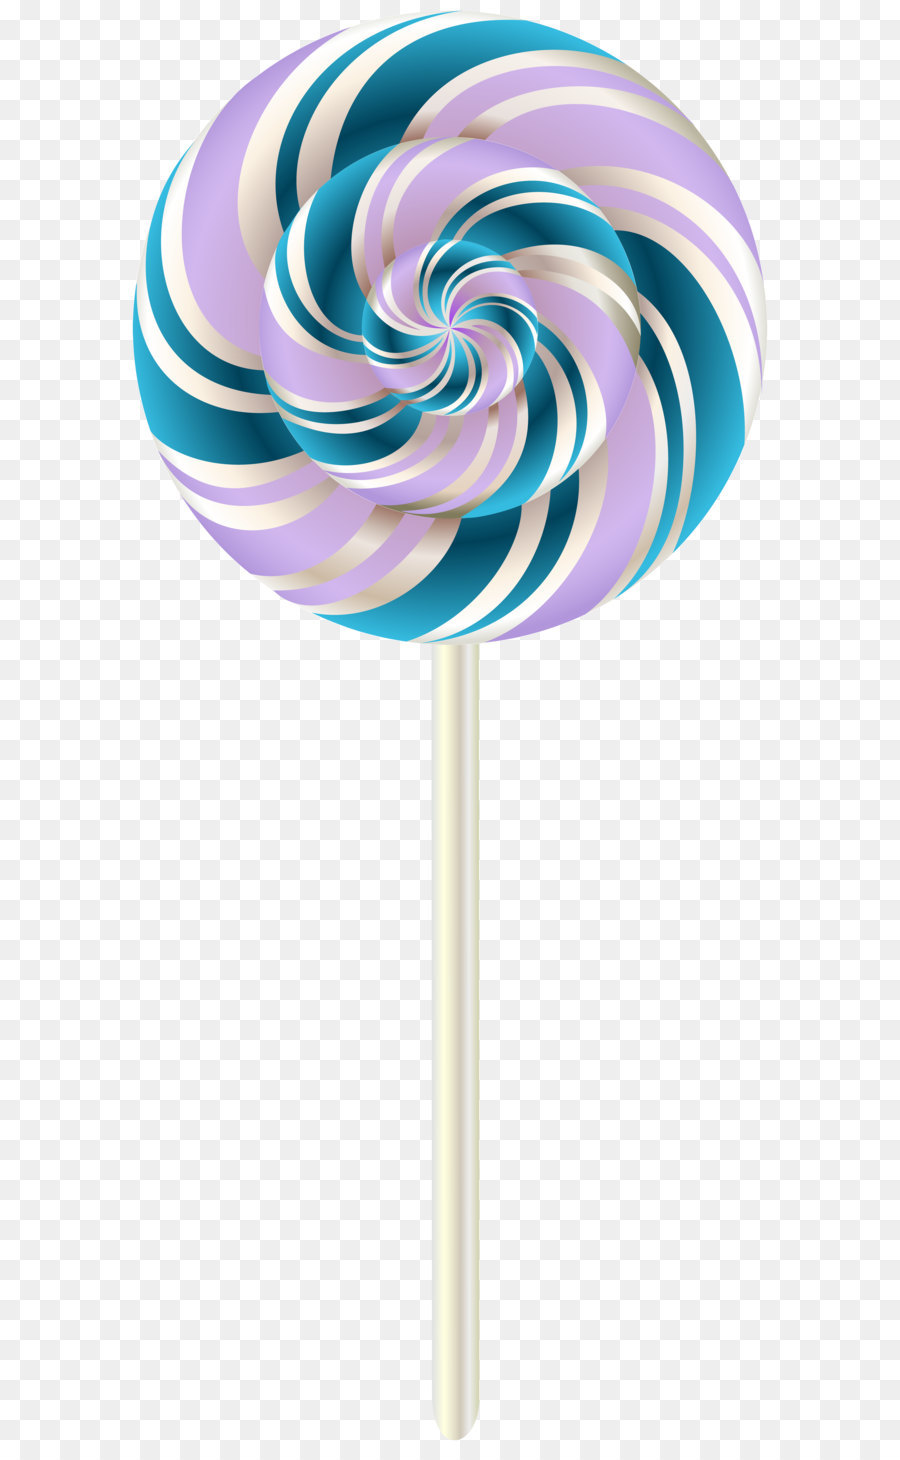 Lollipop Stick candy Clip art - Swirl Lollipop Transparent PNG Clip Art Image png download - 3591*8000 - Free Transparent Lollipop png Download.